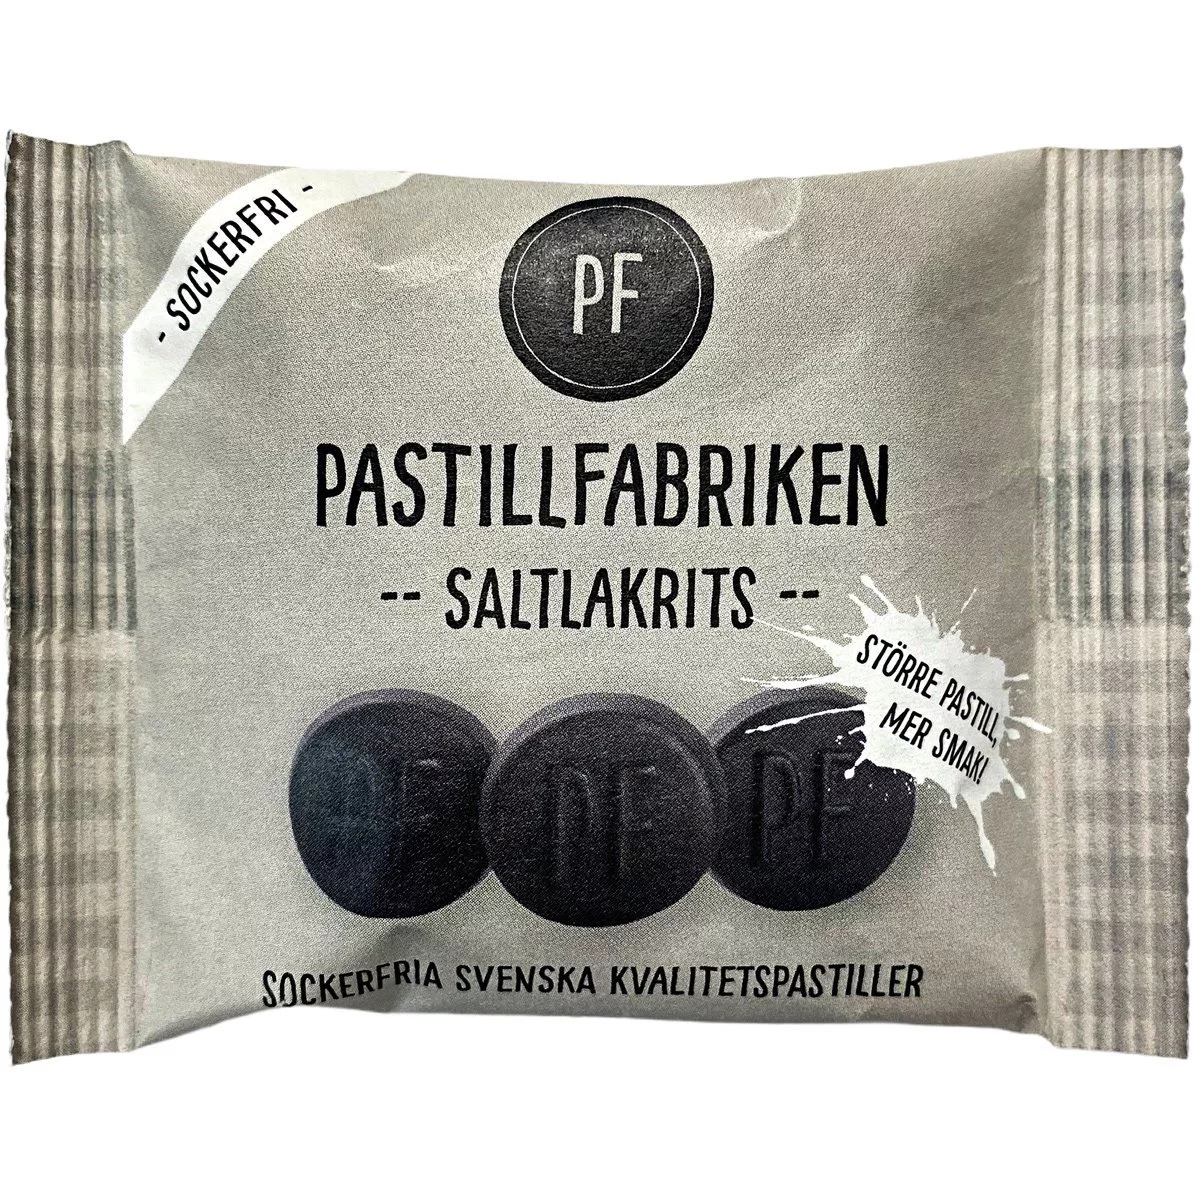 Pastillfabriken Saltlakrits - Salzlakritzpastillen (25g) 1